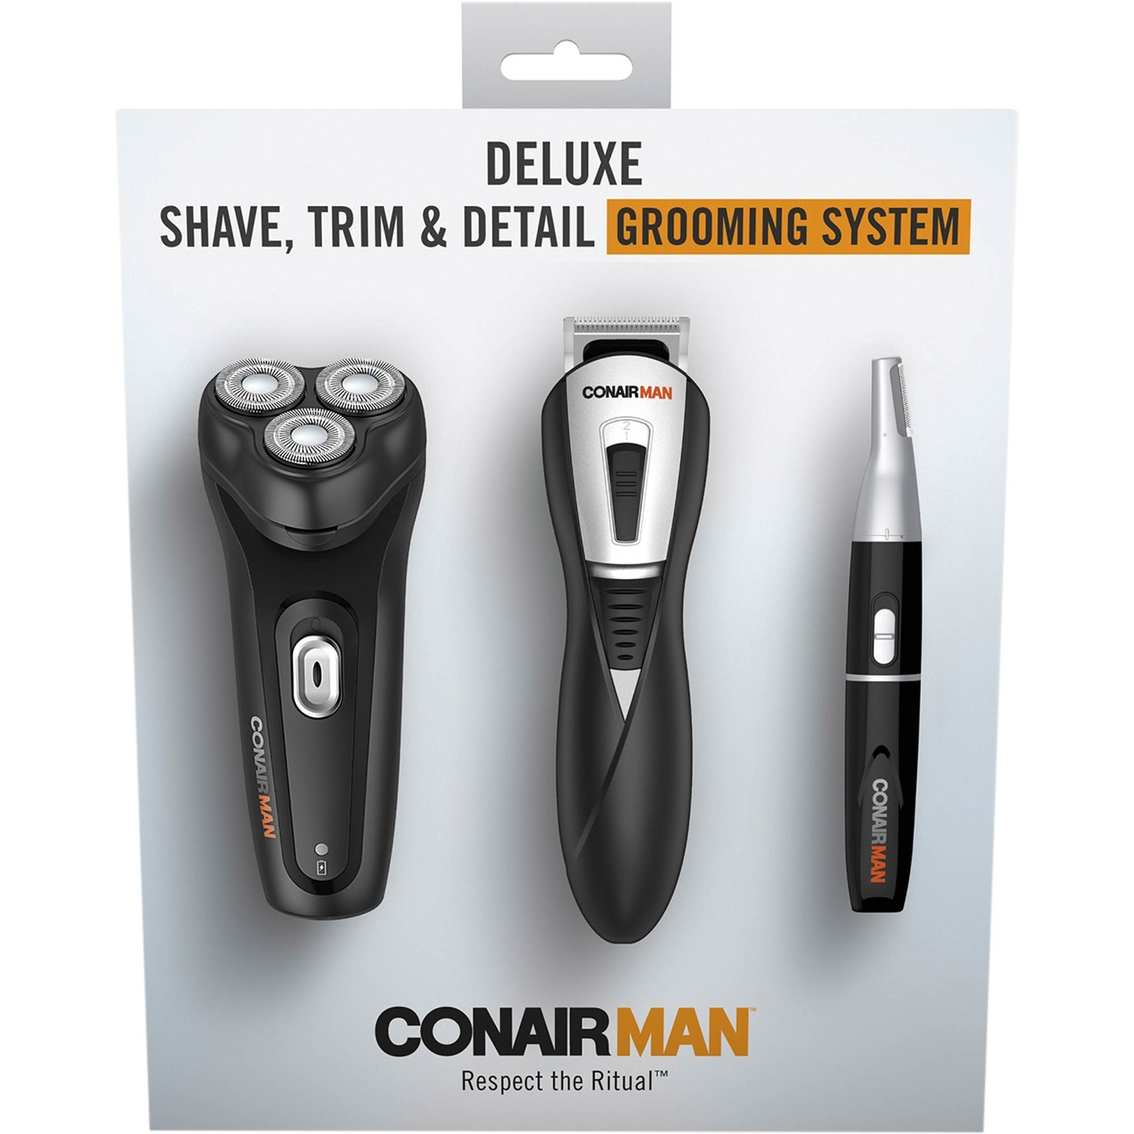 conairman grooming system